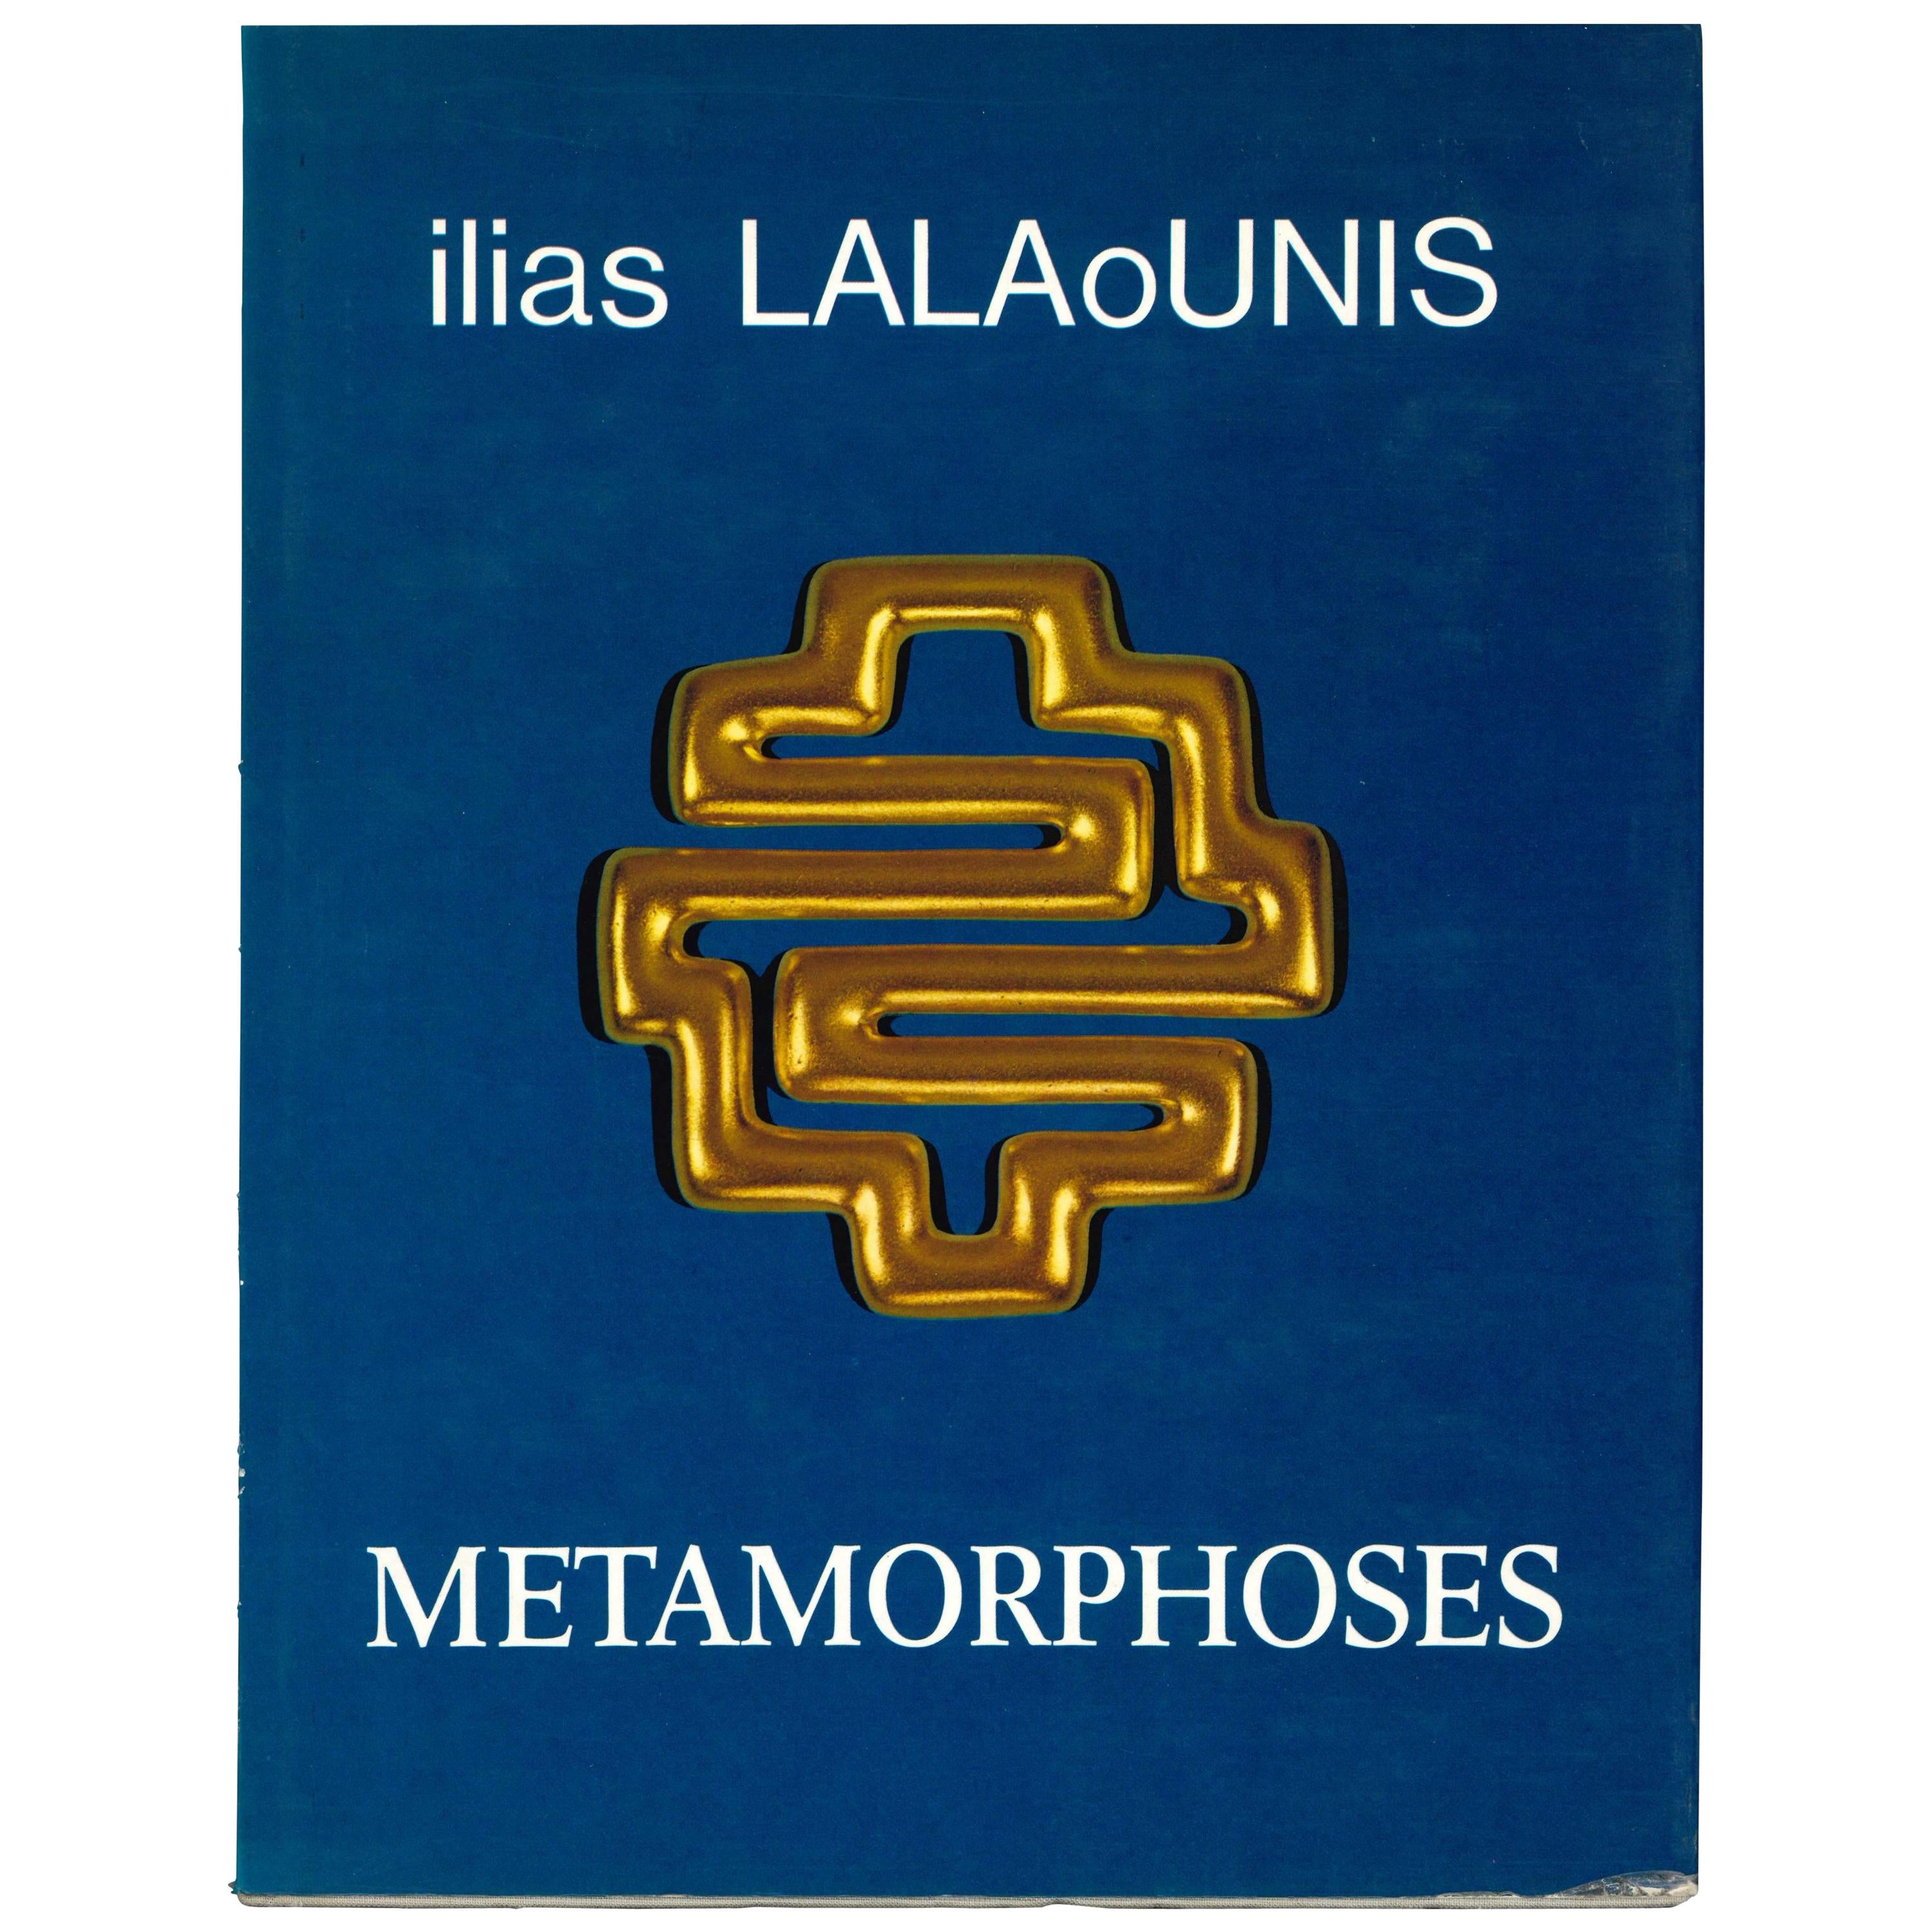 Metamorphoses by Ilias Lalaounis 'Book'